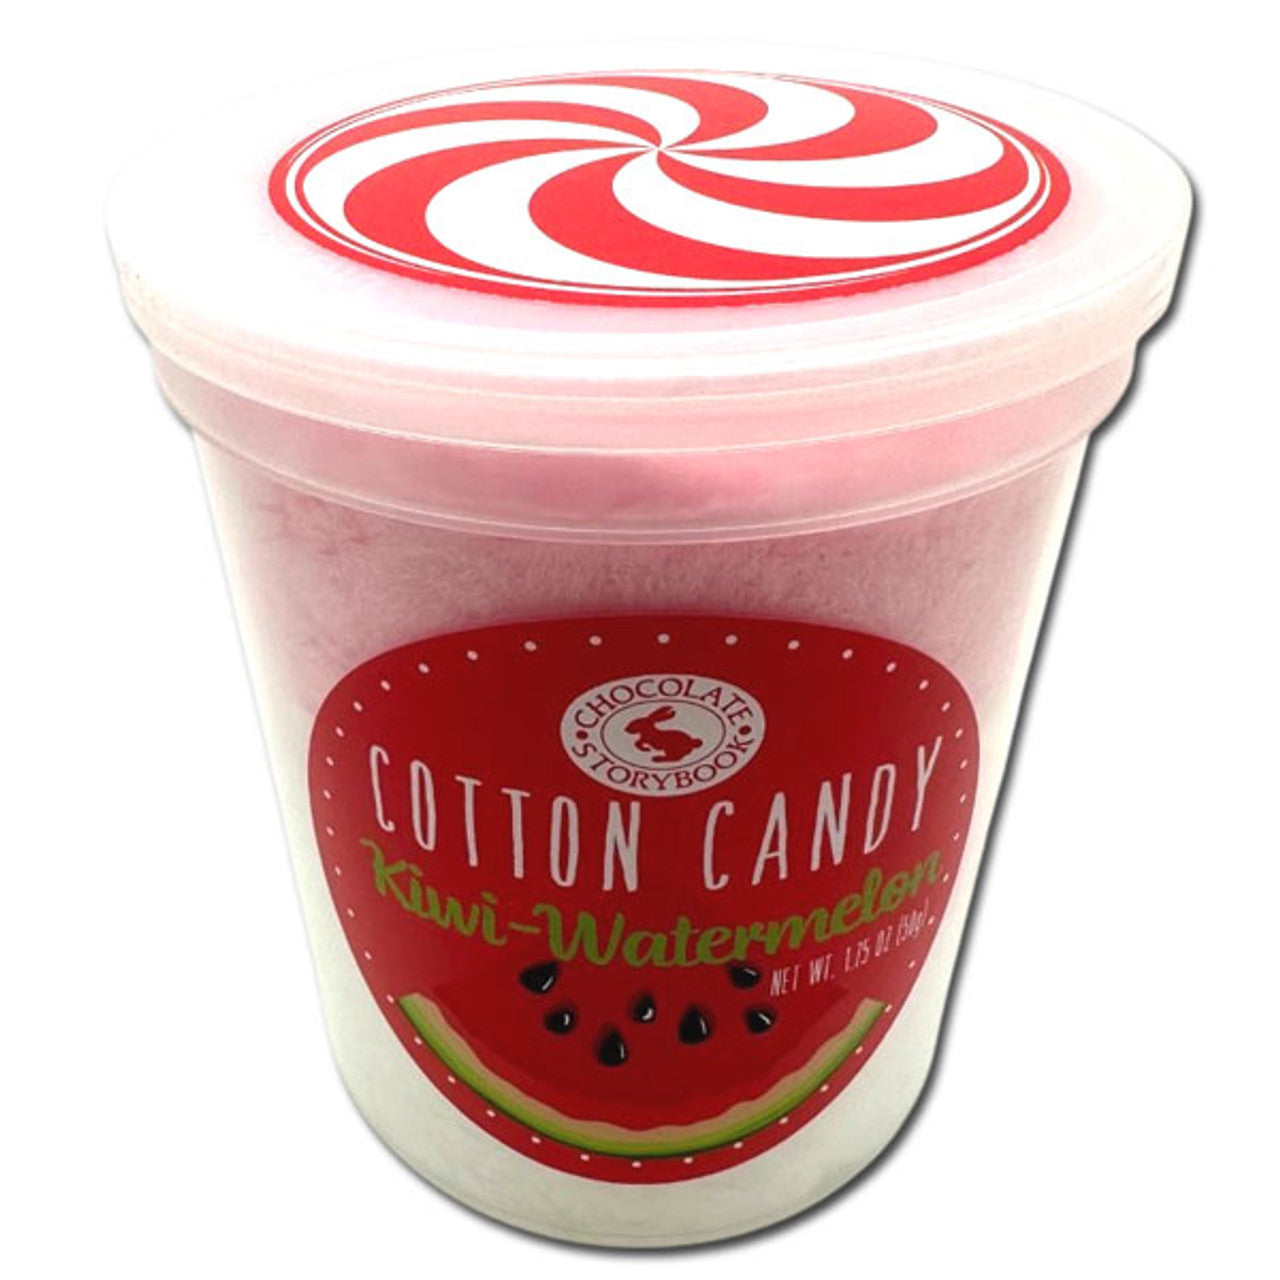 Kiwi-Watermelon Flavored Cotton Candy